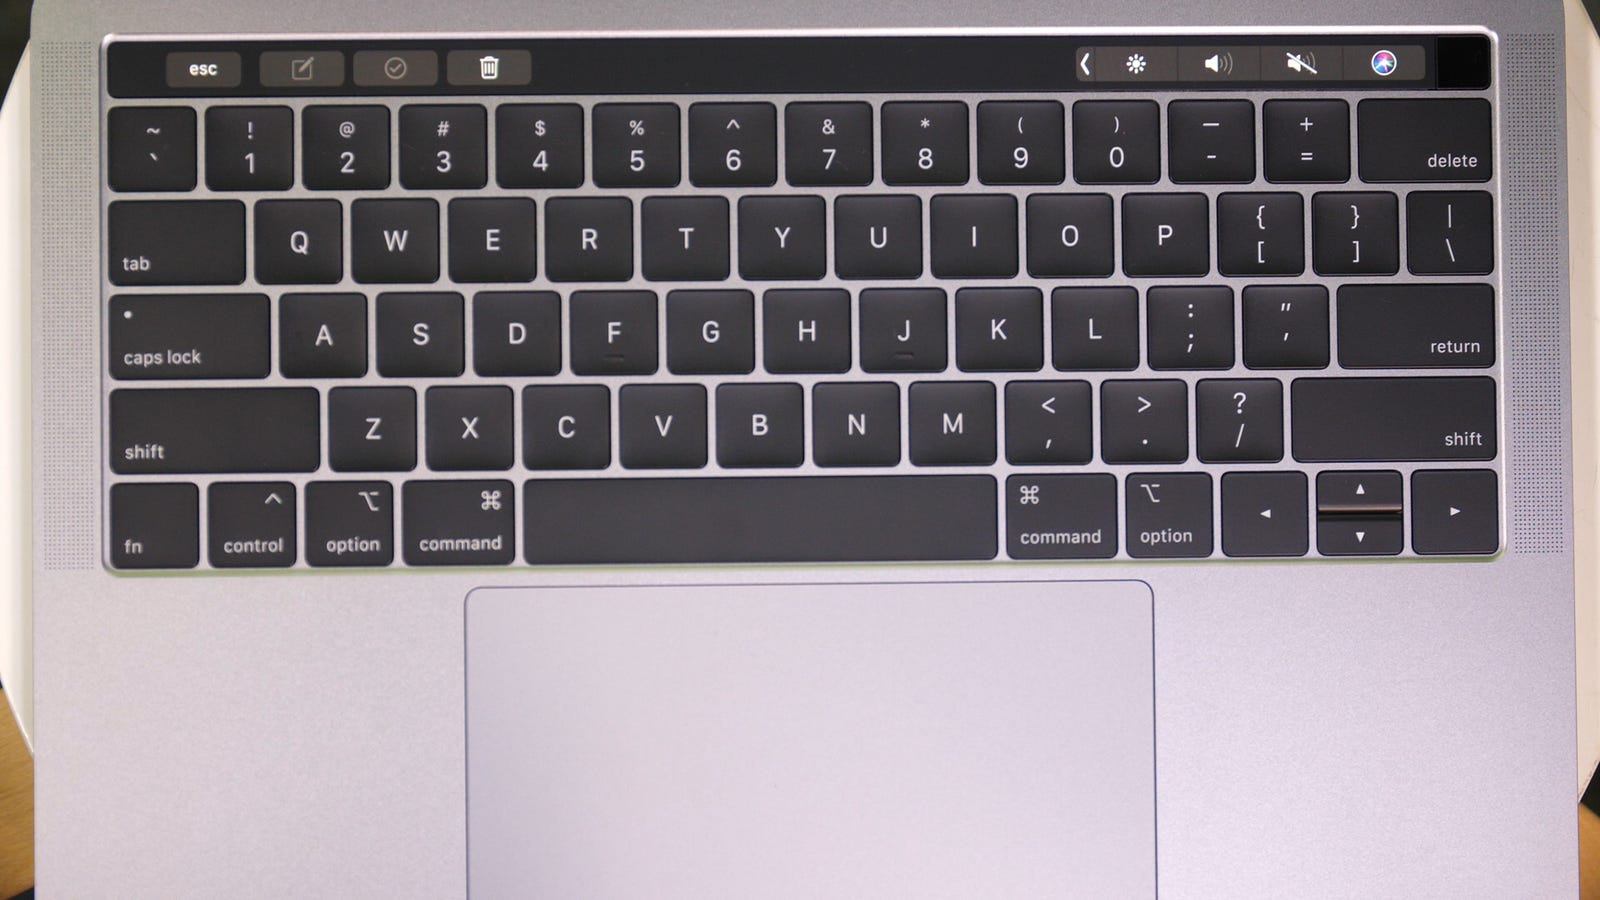 will apple keyboard work on pc